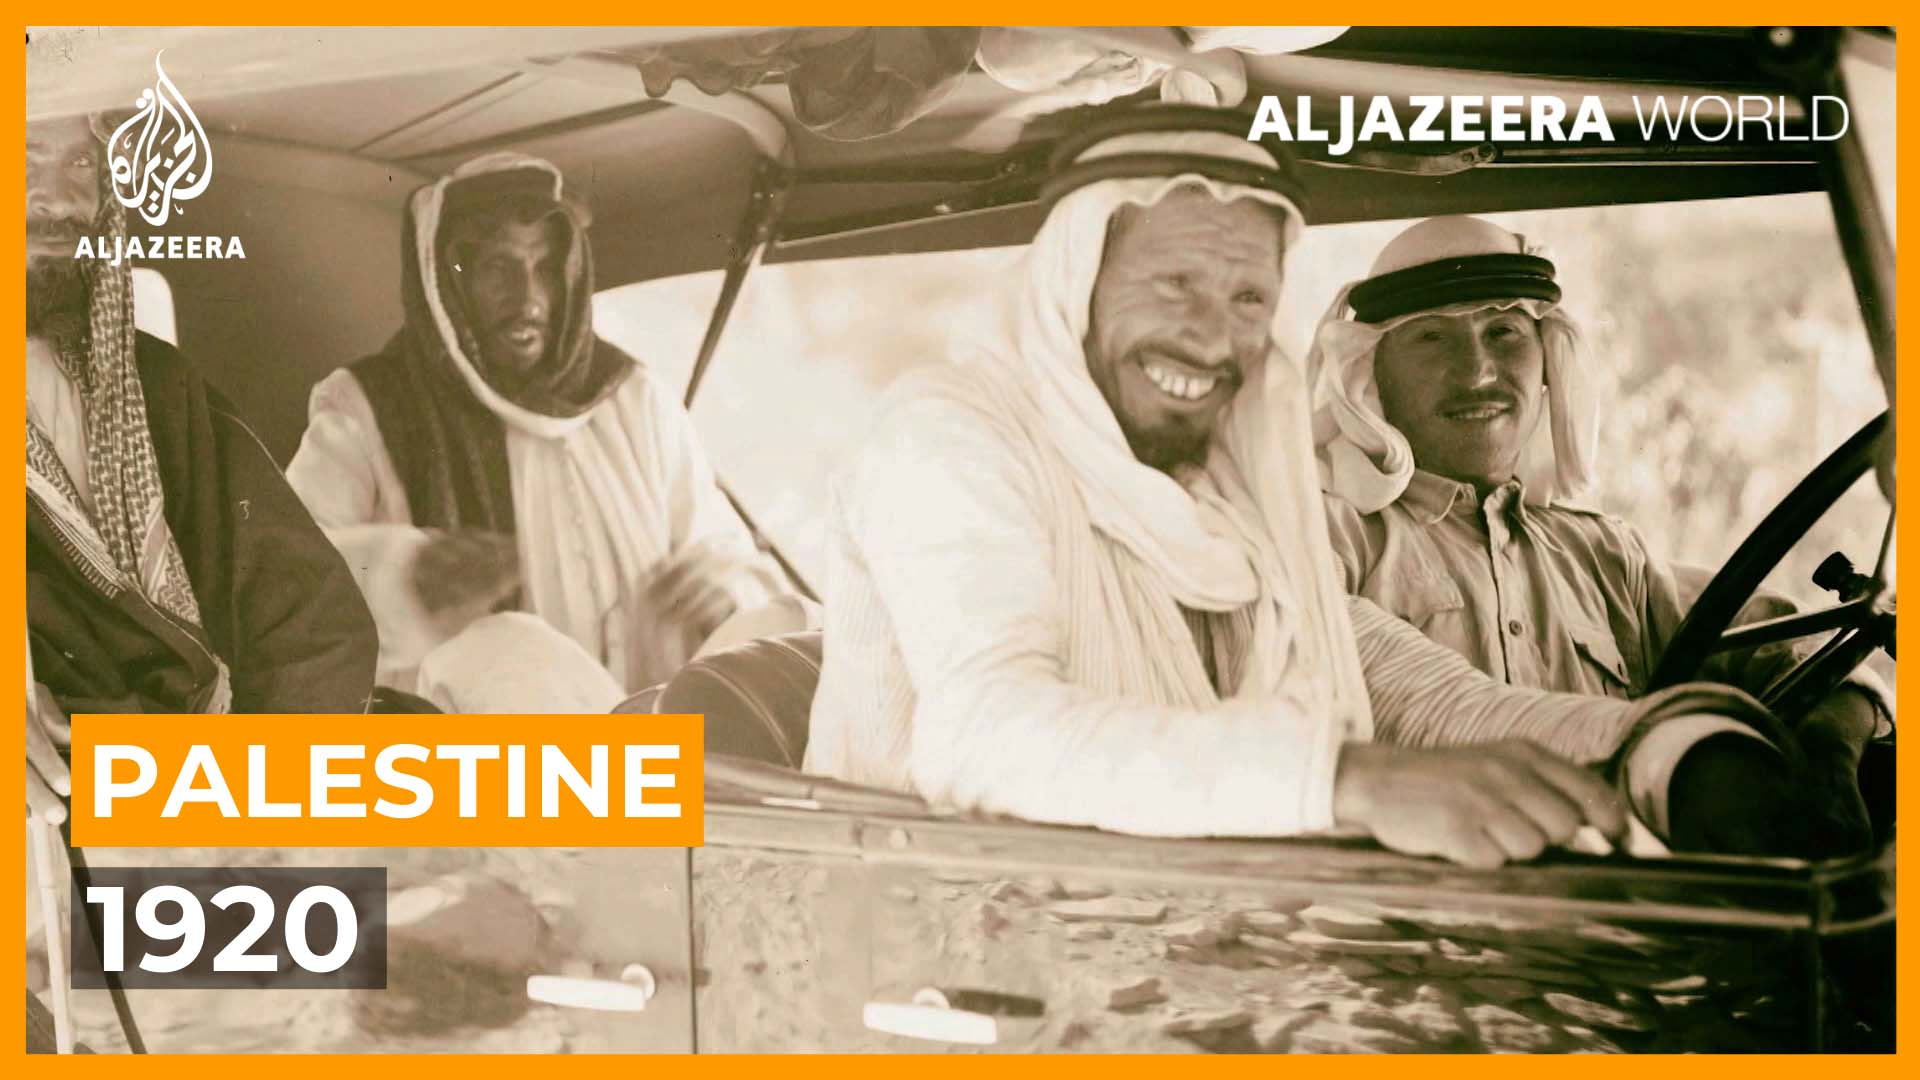 Palestine 1920: The Other Side of the Palestinian Story | Al Jazeera World